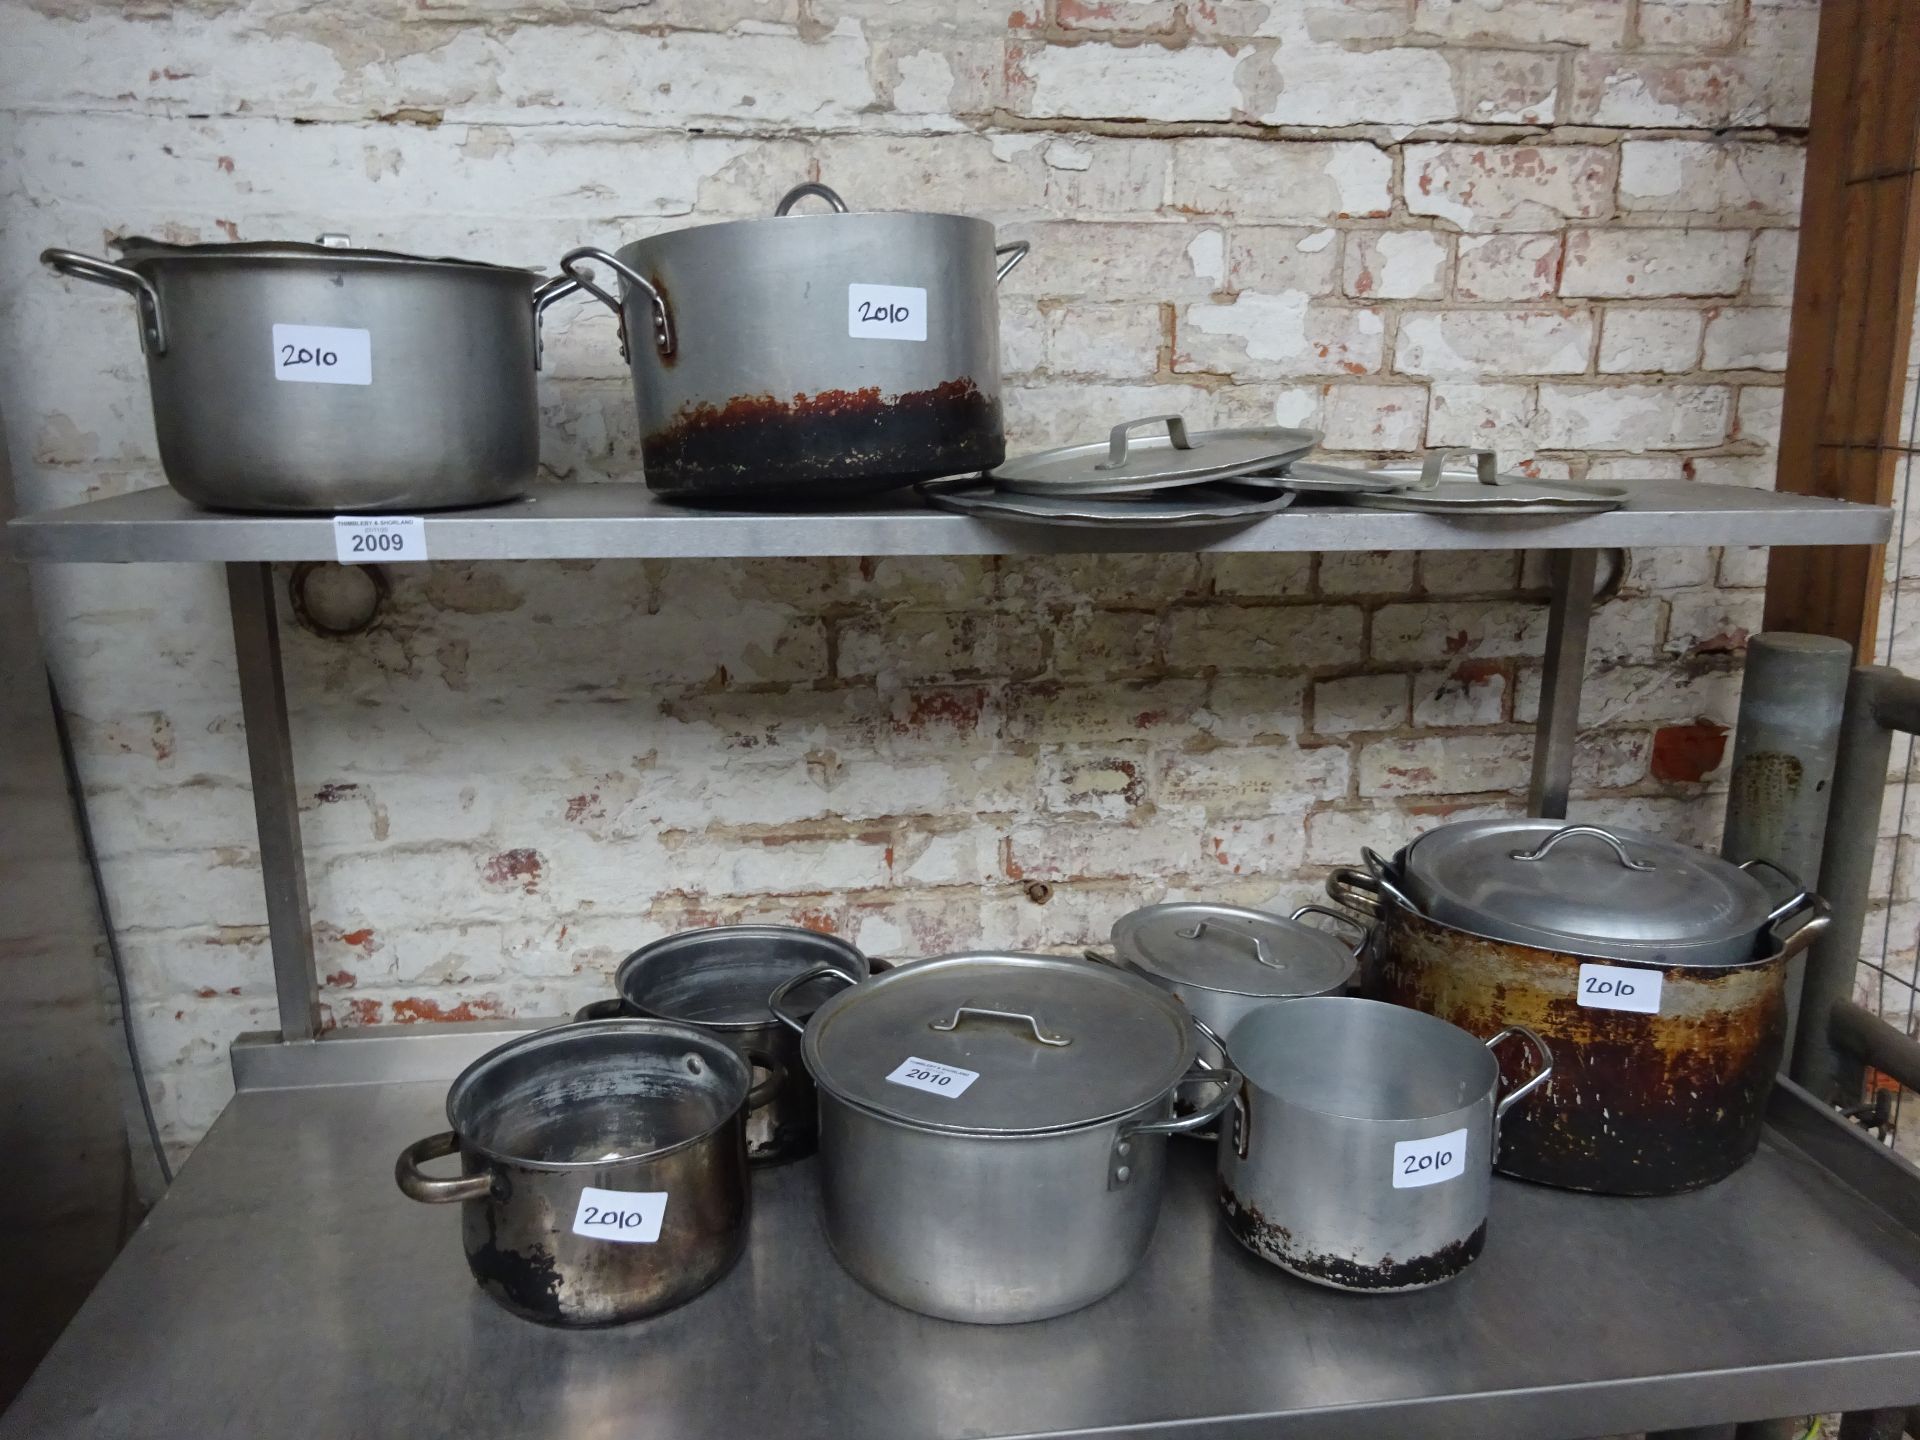 Quantity of cooking pots